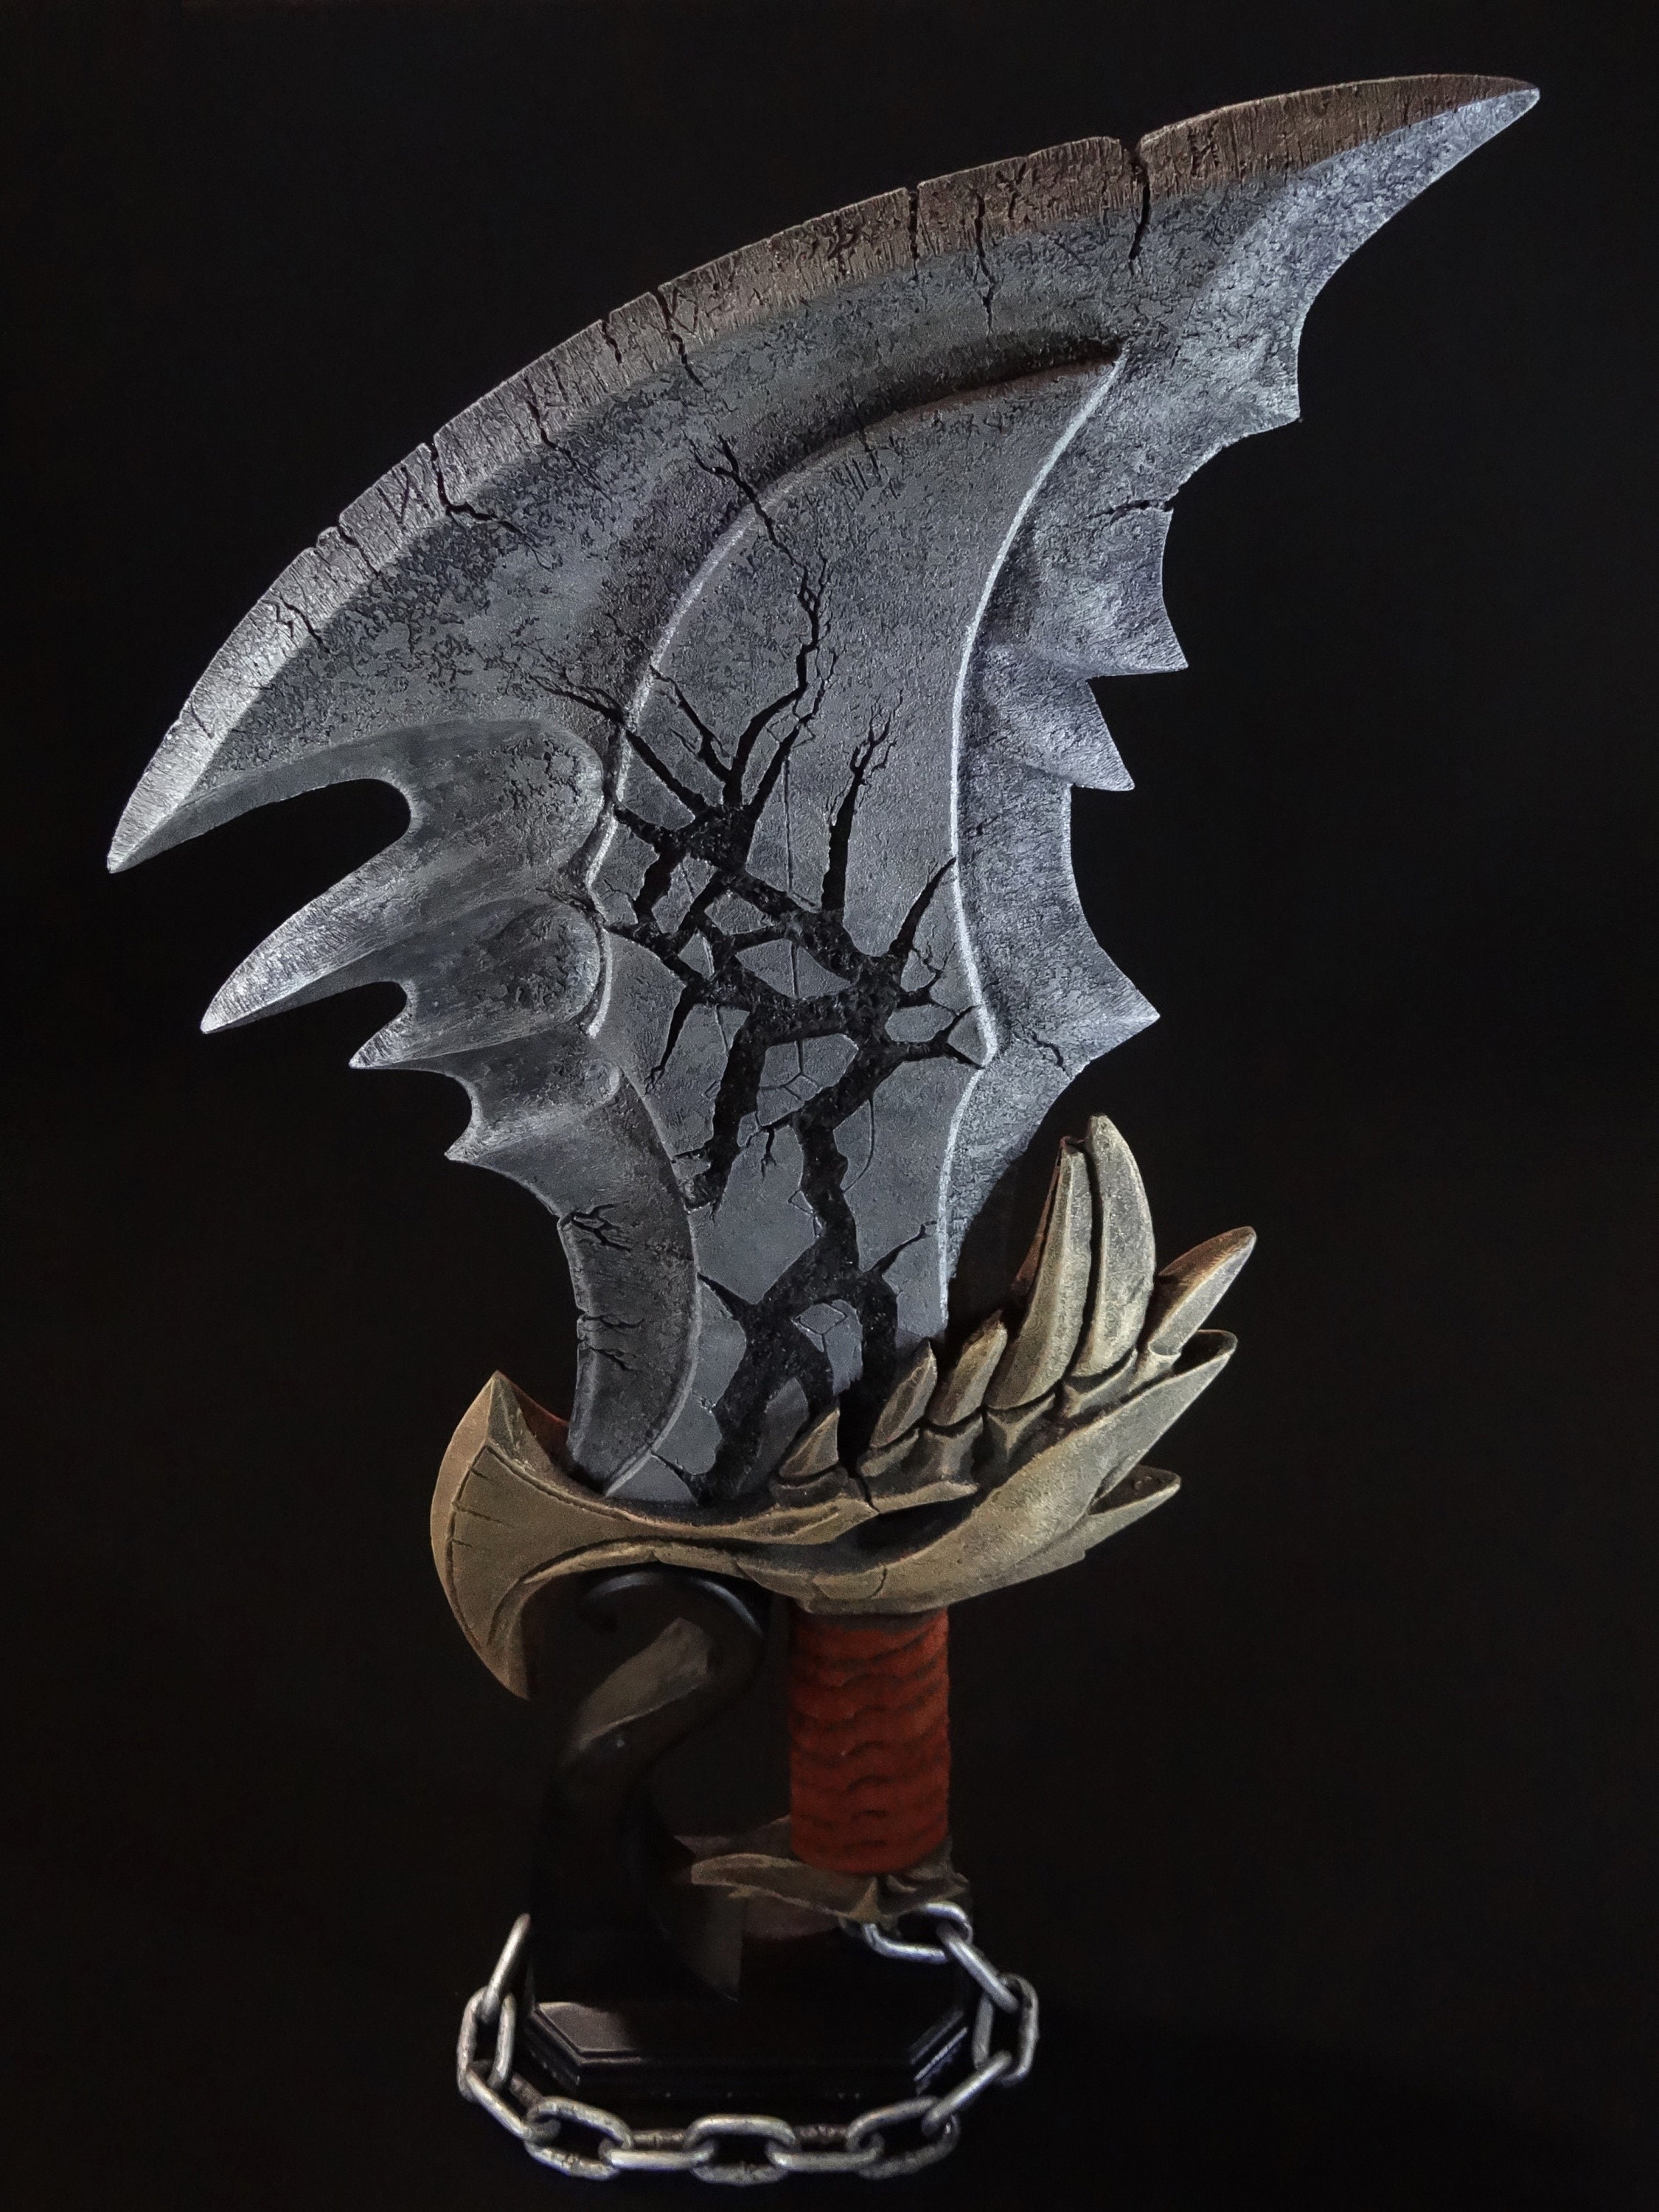 20cm Blade of Olympus God of War 2 Kratos Metal Sword Replica Miniatures  Game Peripheral 1/